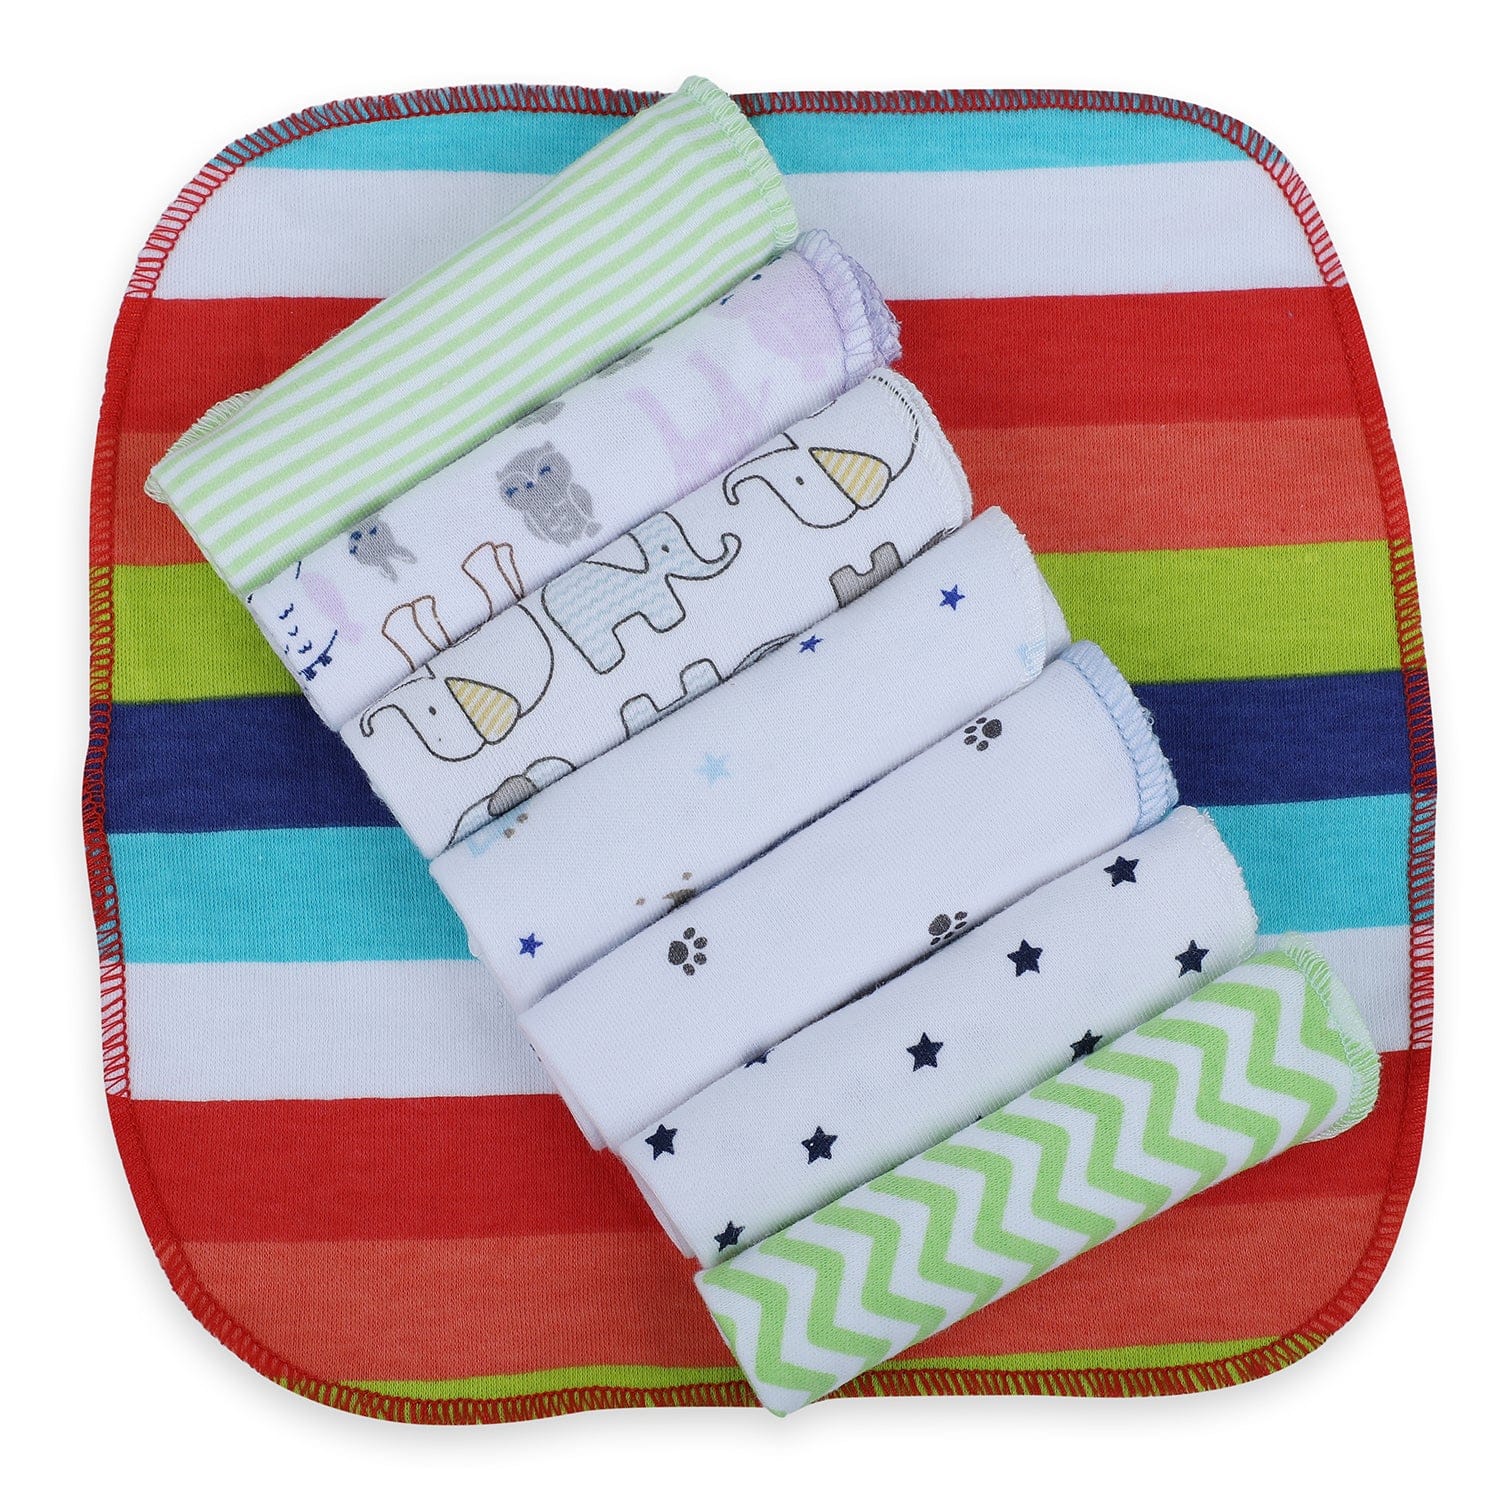 Baby Moo Unisex Cotton 20 x 20 cm Soft Hosiery Wash Cloth - Multicolour - Baby Moo